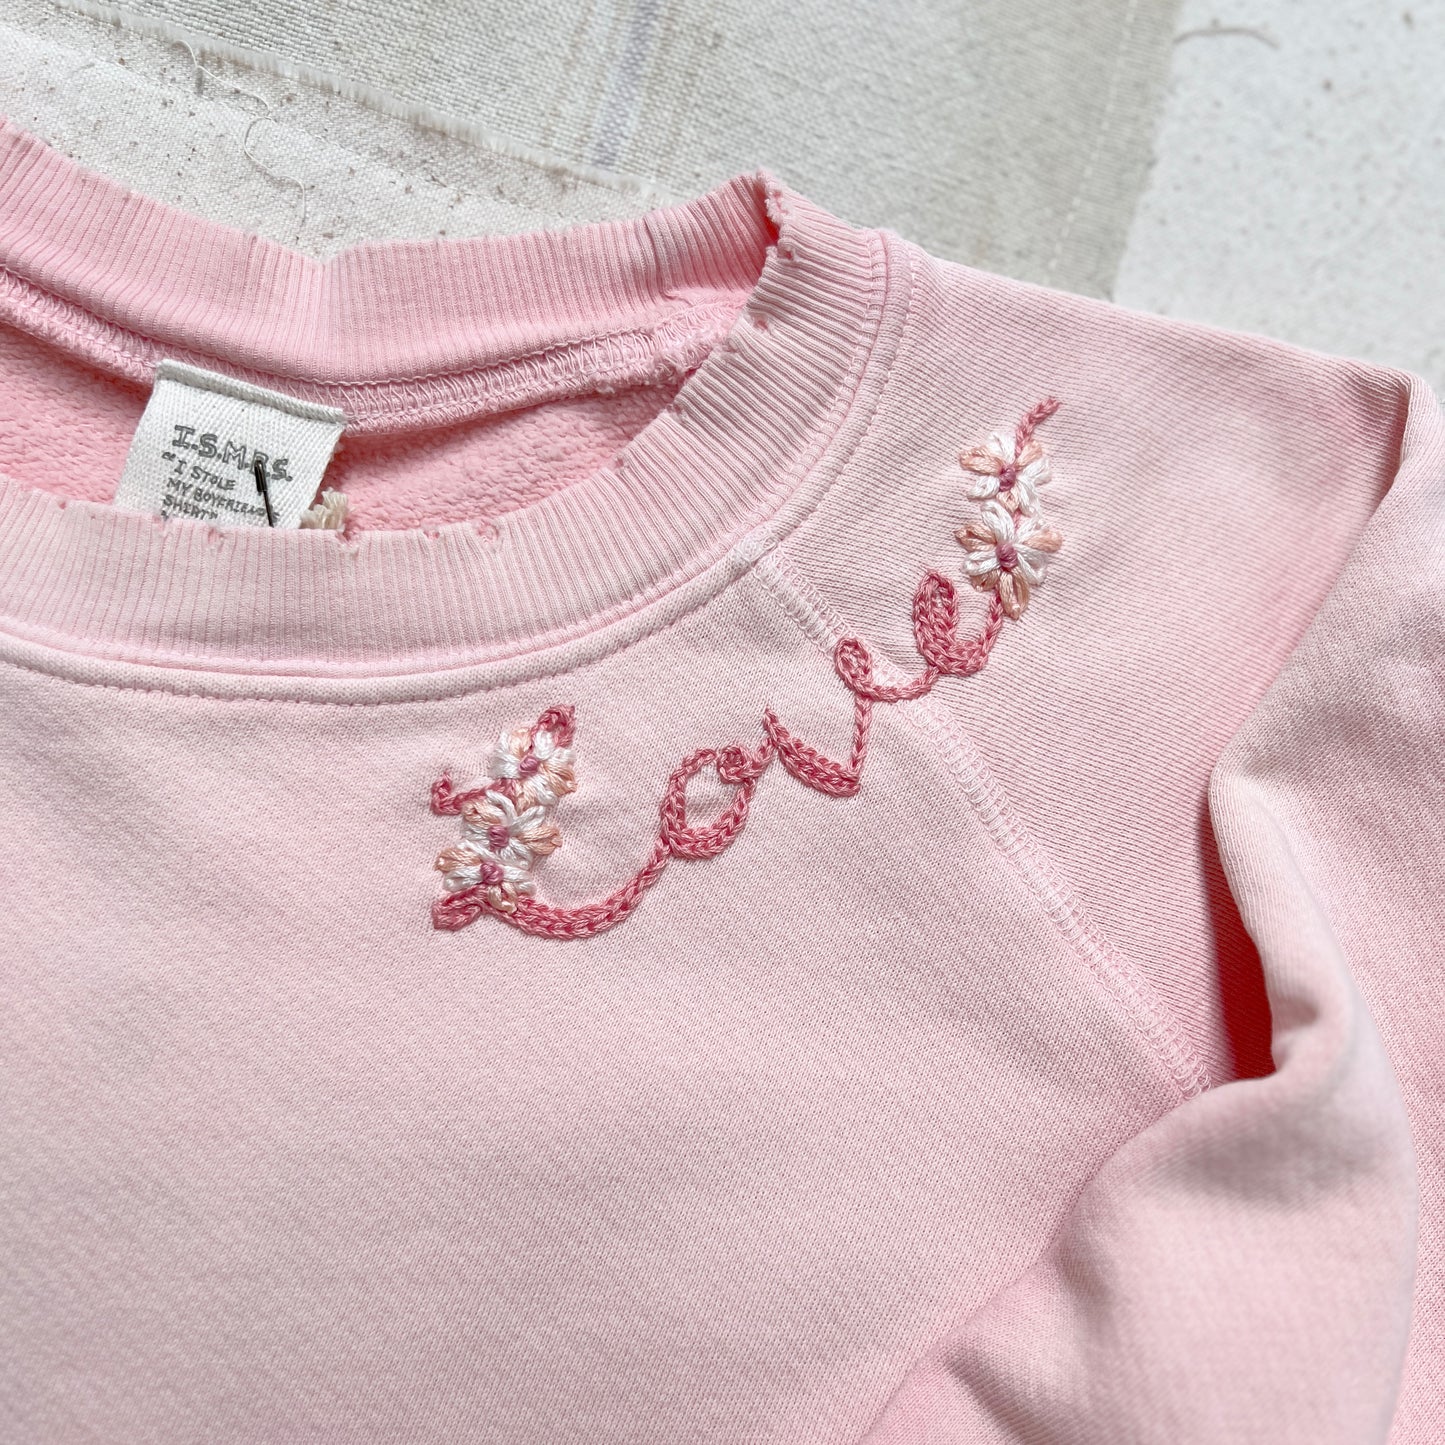 Floral Love Sweatshirt(4Colors)